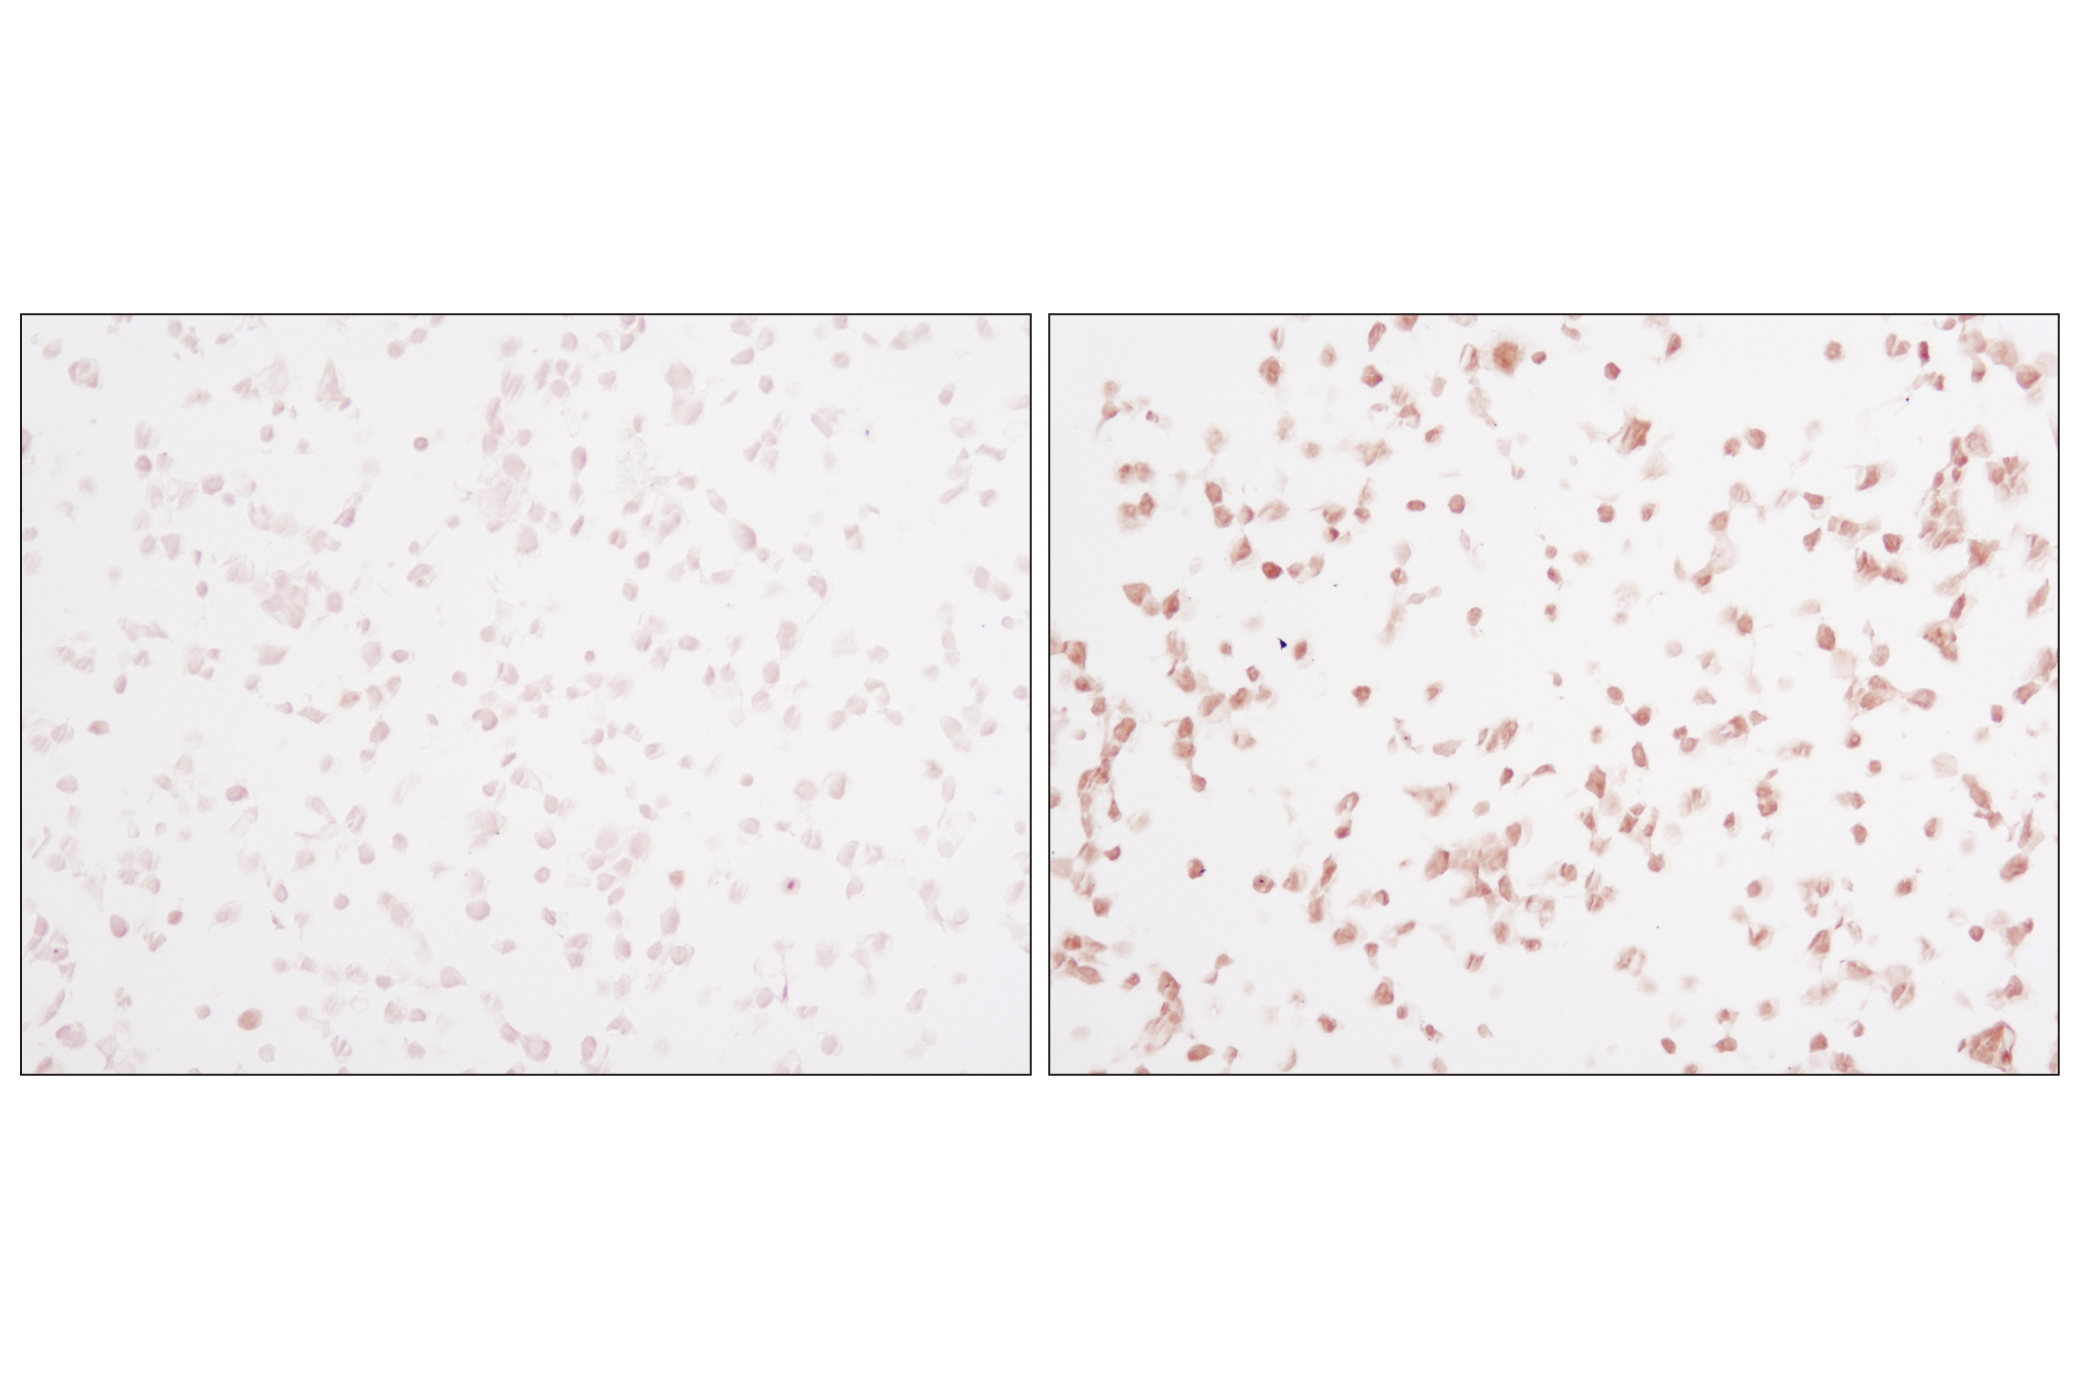  Image 6: PhosphoPlus® SAPK/JNK (Thr183/Tyr185) Antibody Duet